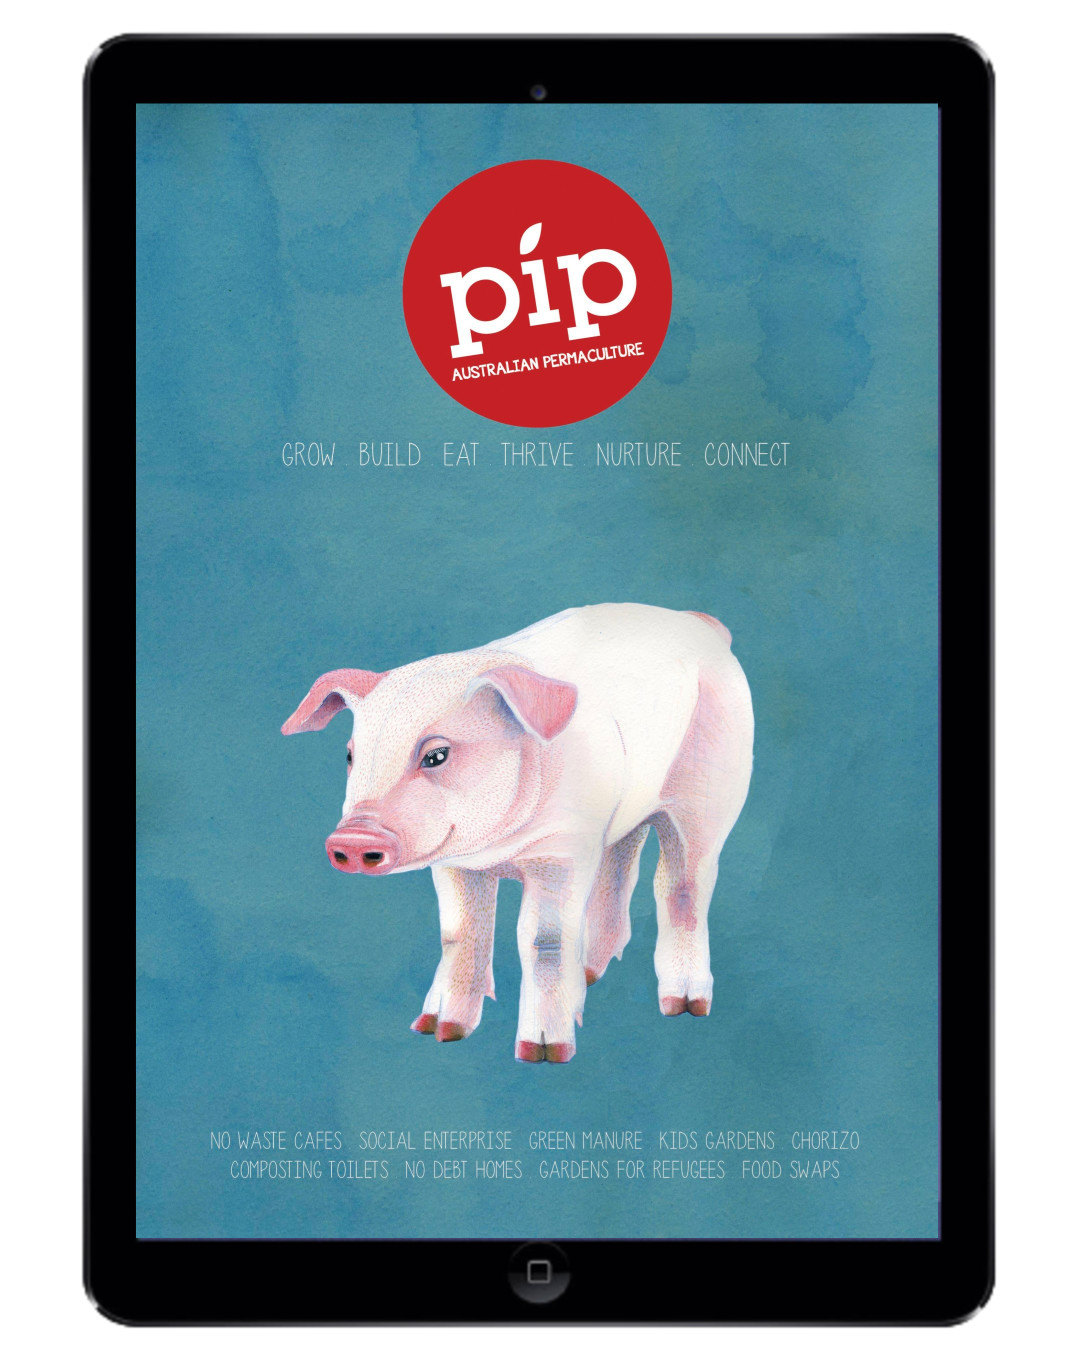 pip-magazine-digital-issue 2-1080x1350